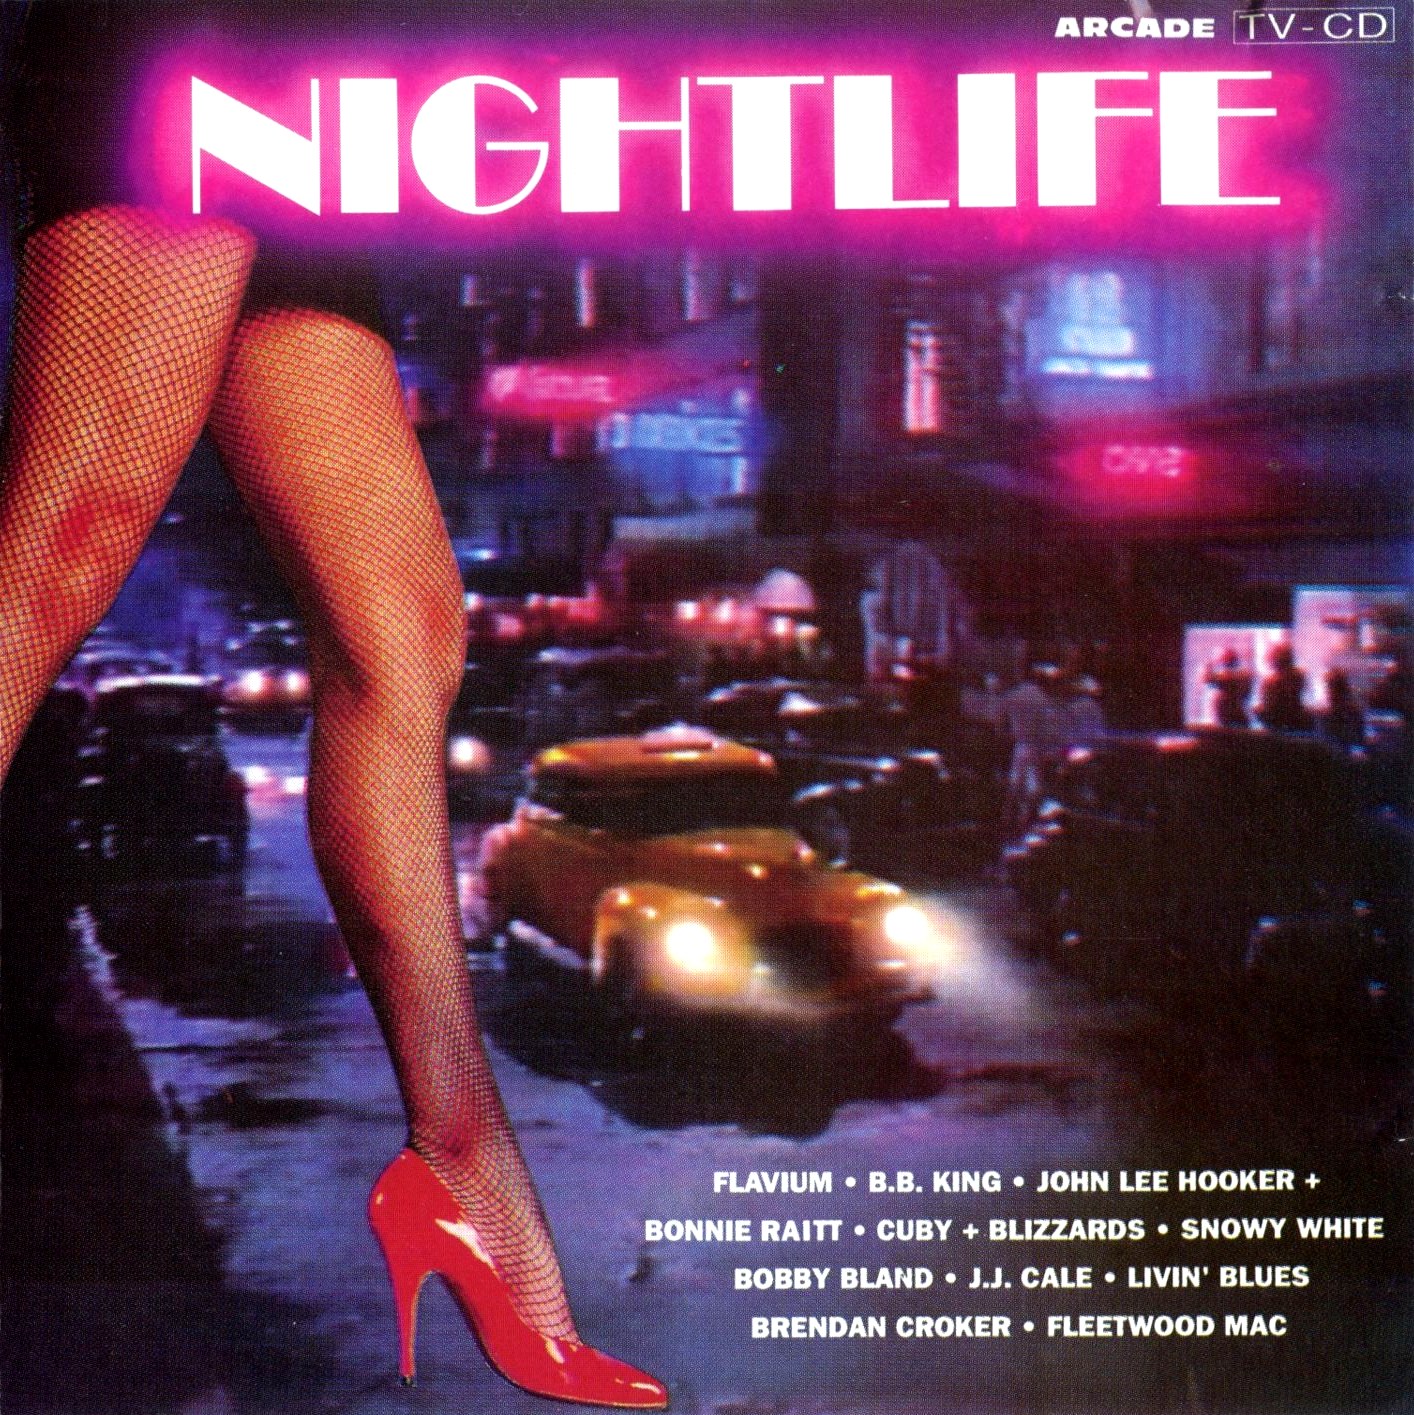 Nightlife (1991) - Arcade